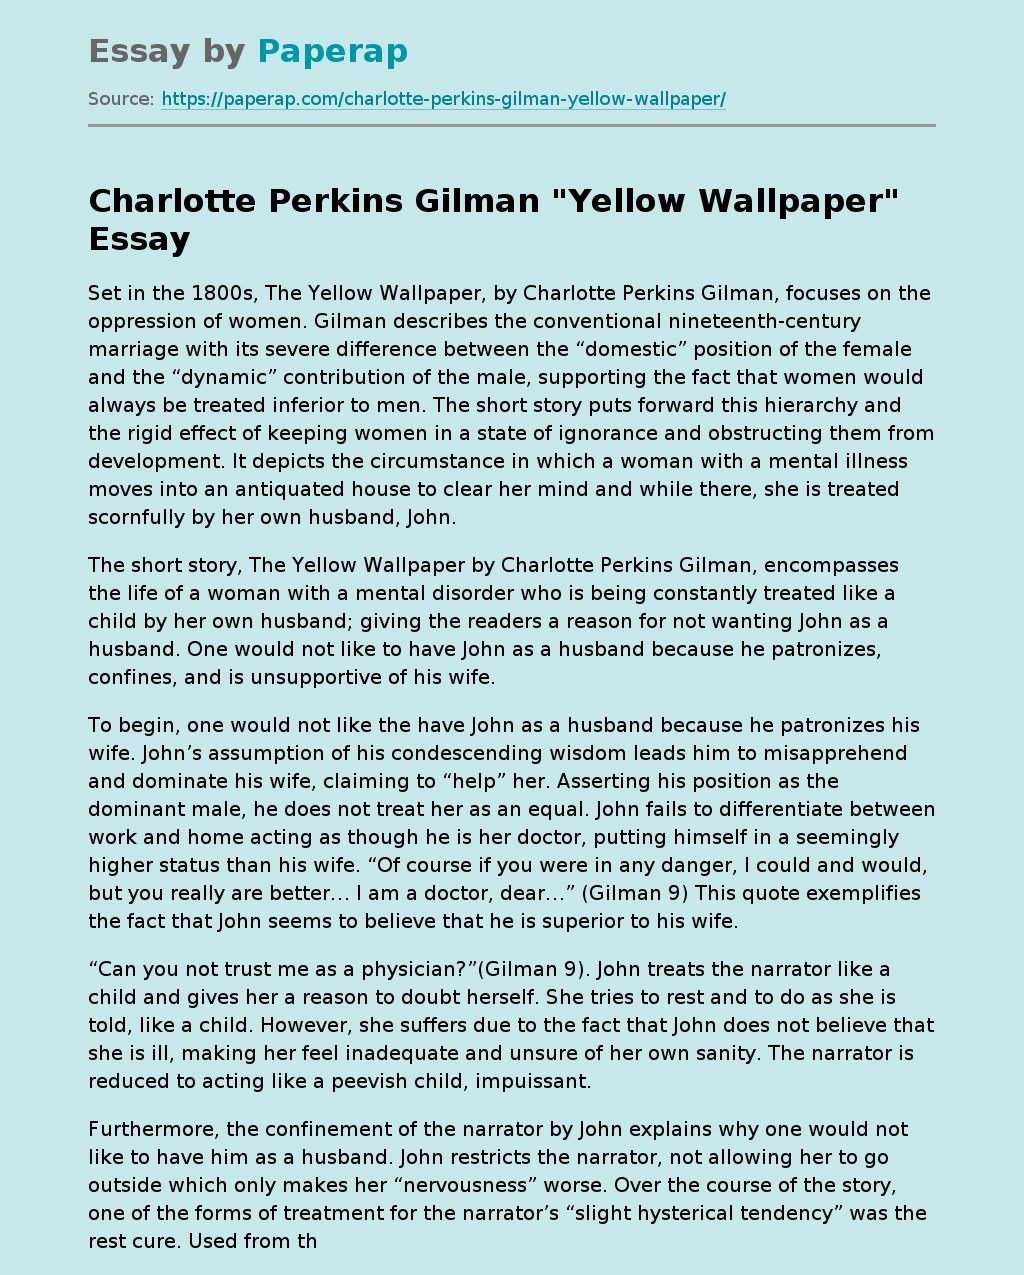 Charlotte Perkins Gilman "Yellow Wallpaper"